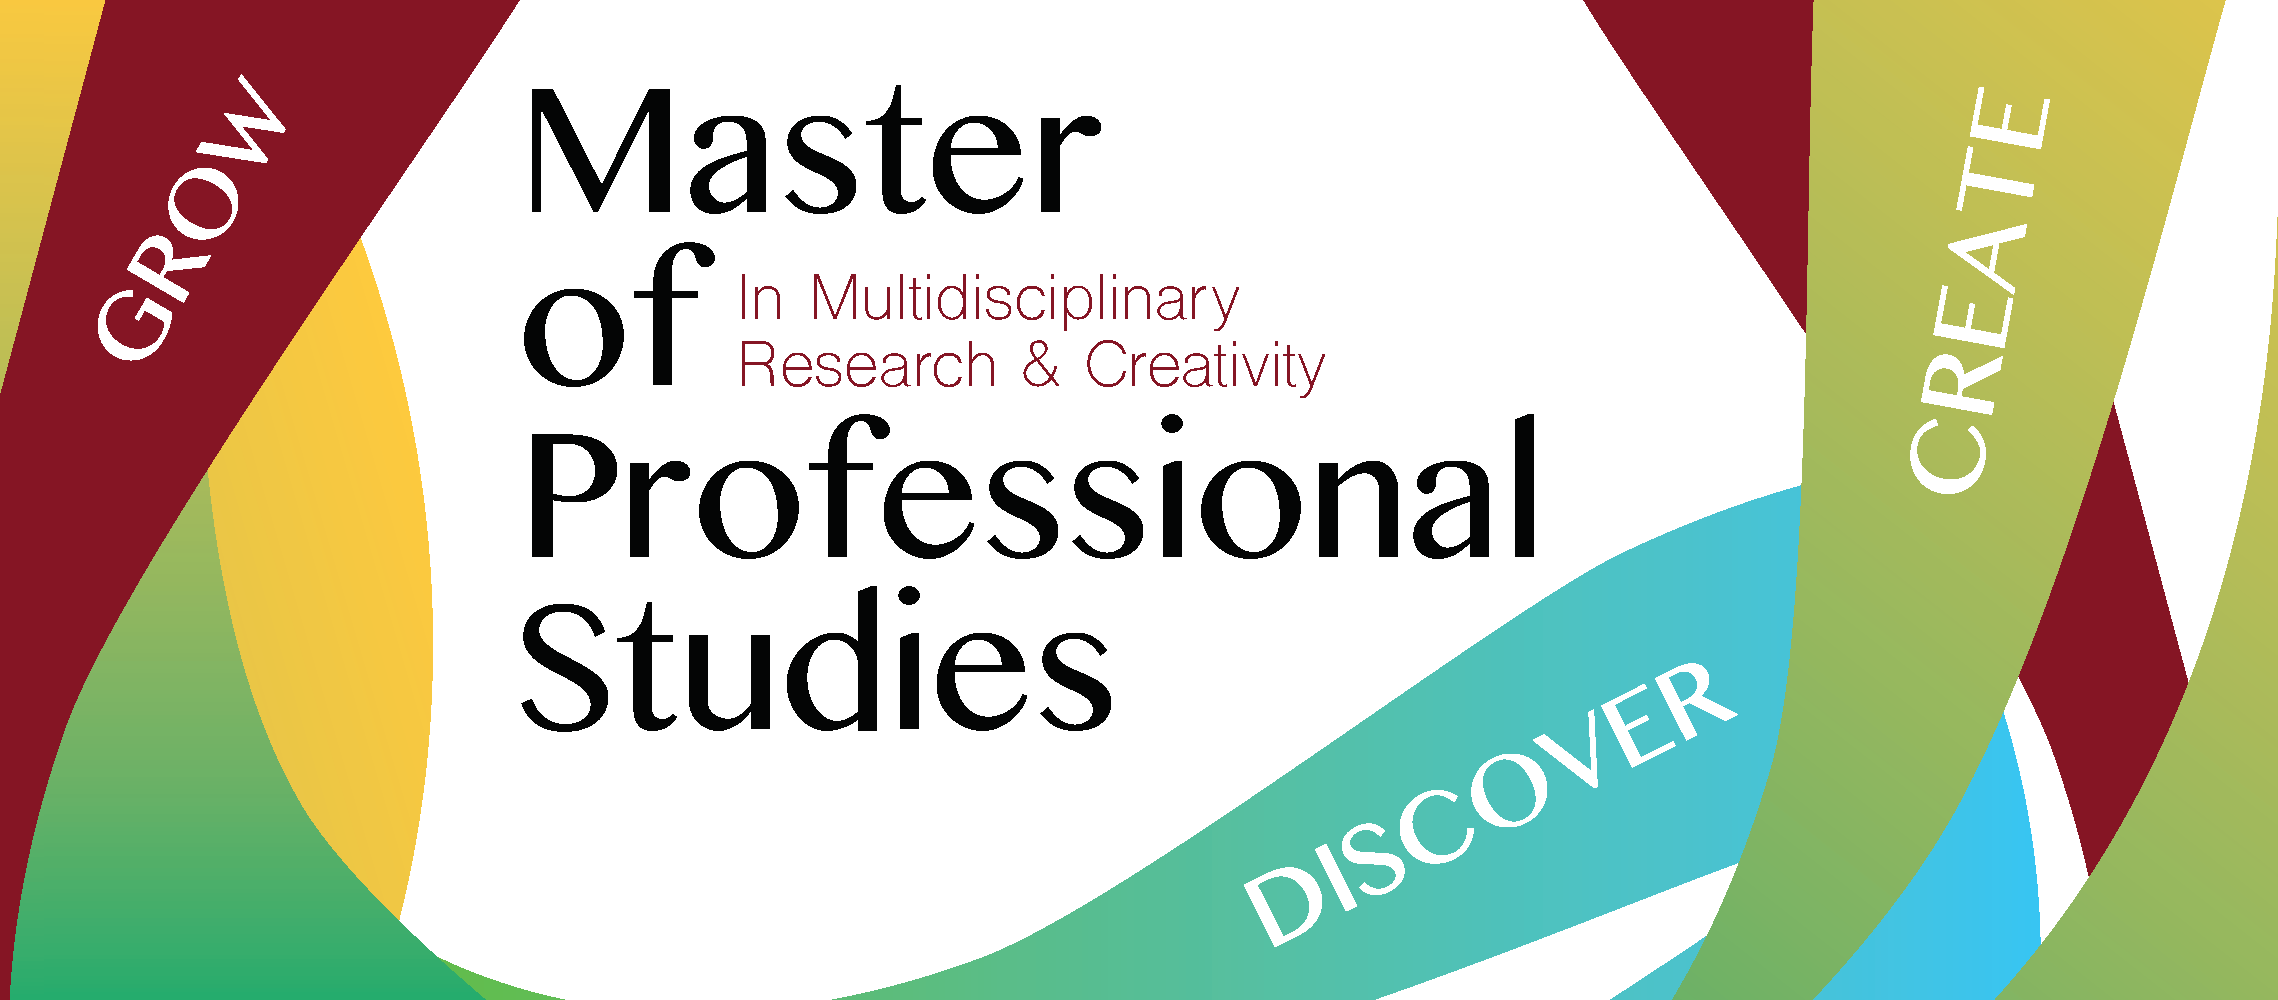 Master of Professional Studies banner image